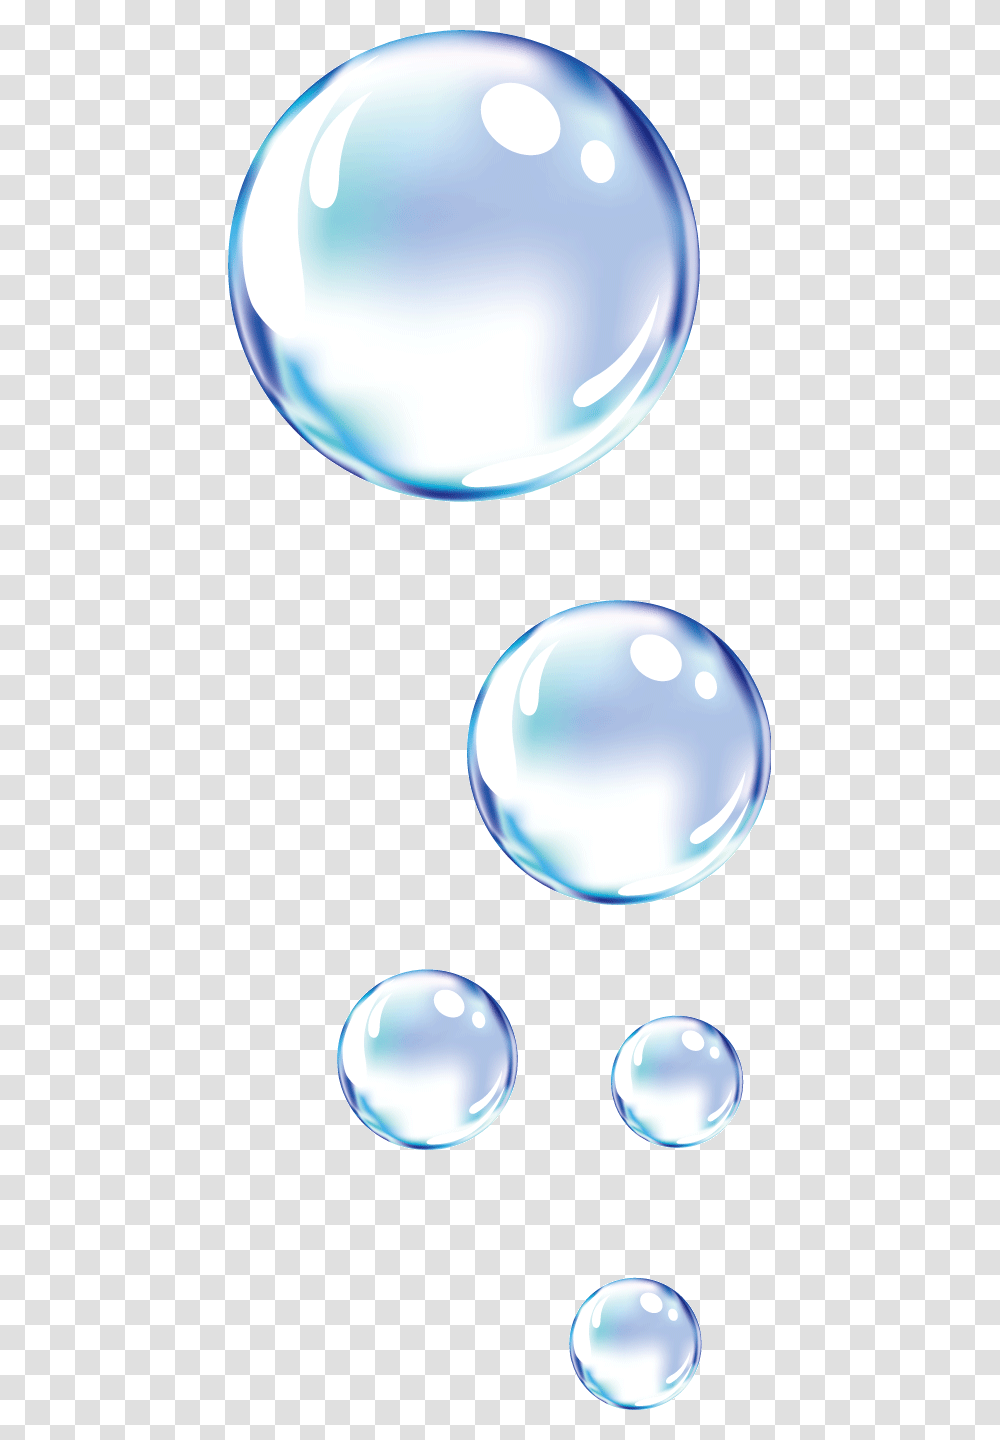 Soapbubble Bubble Bubbles Burbuja Burbujas, Sphere Transparent Png